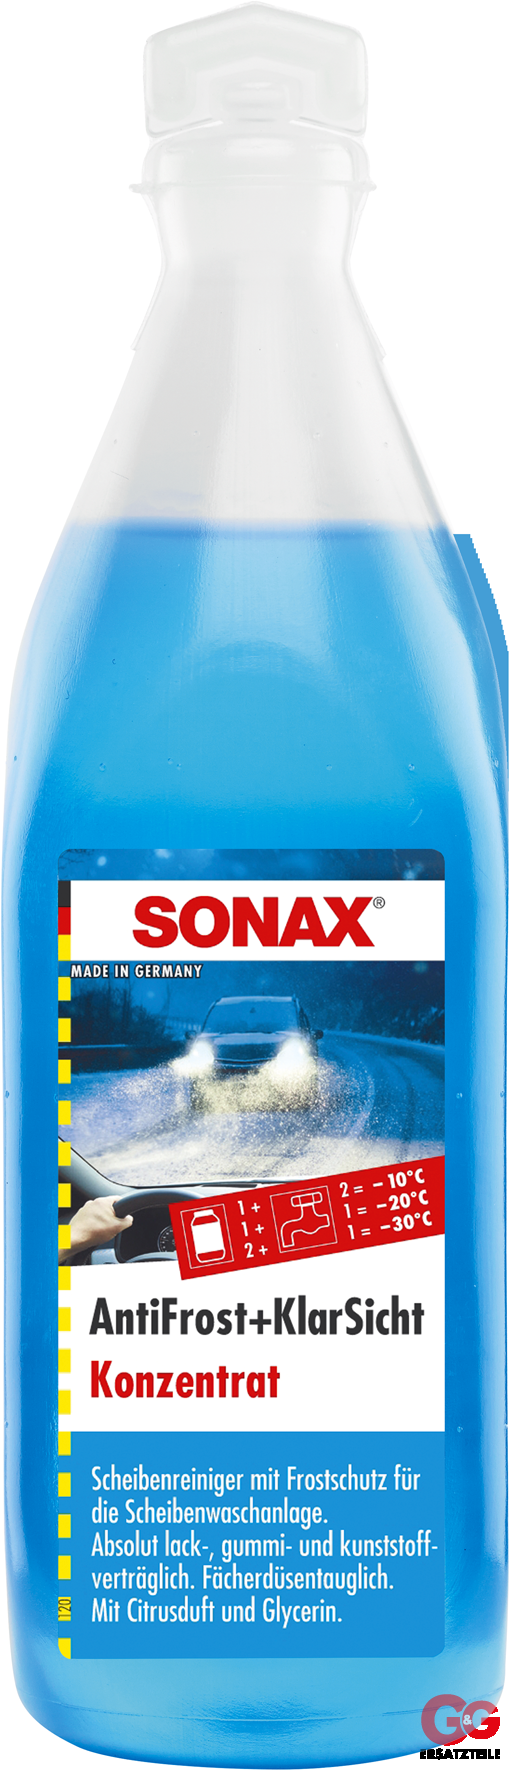 SONAX AntiFrost & KlarSicht Konzentrat Citrus 0,25 l Art.Nr